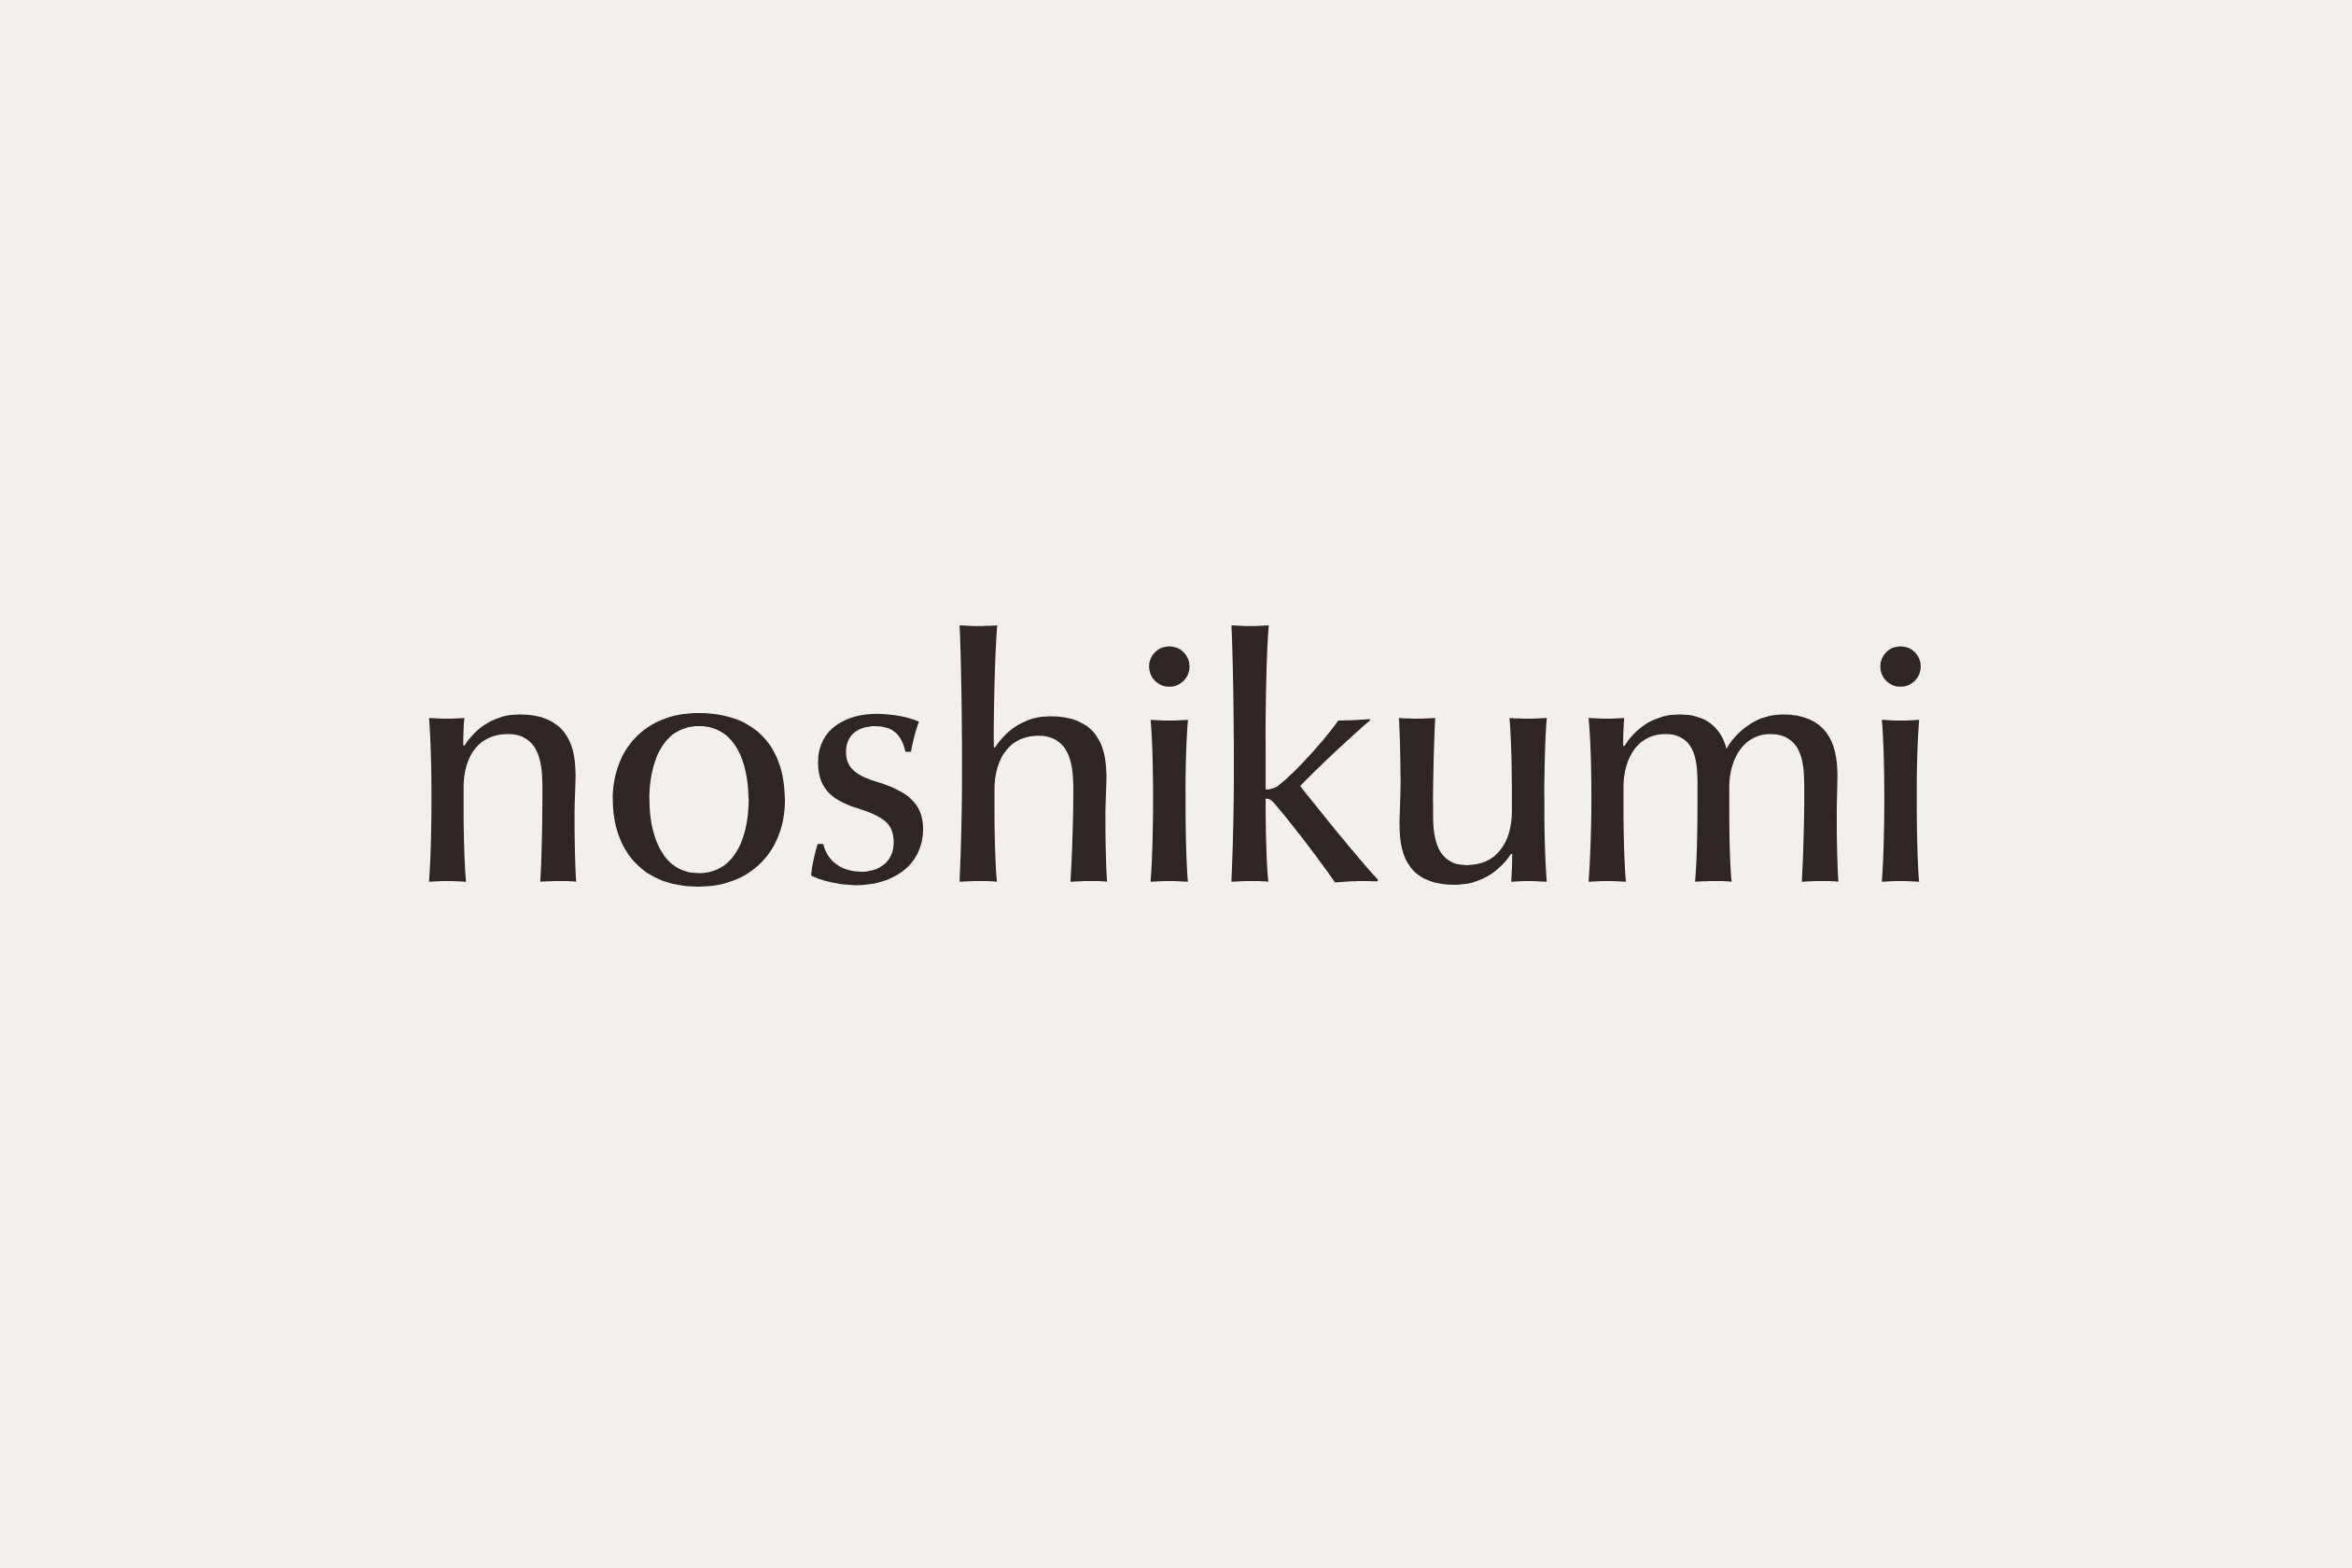 Noshikumi Identity Logotype Design